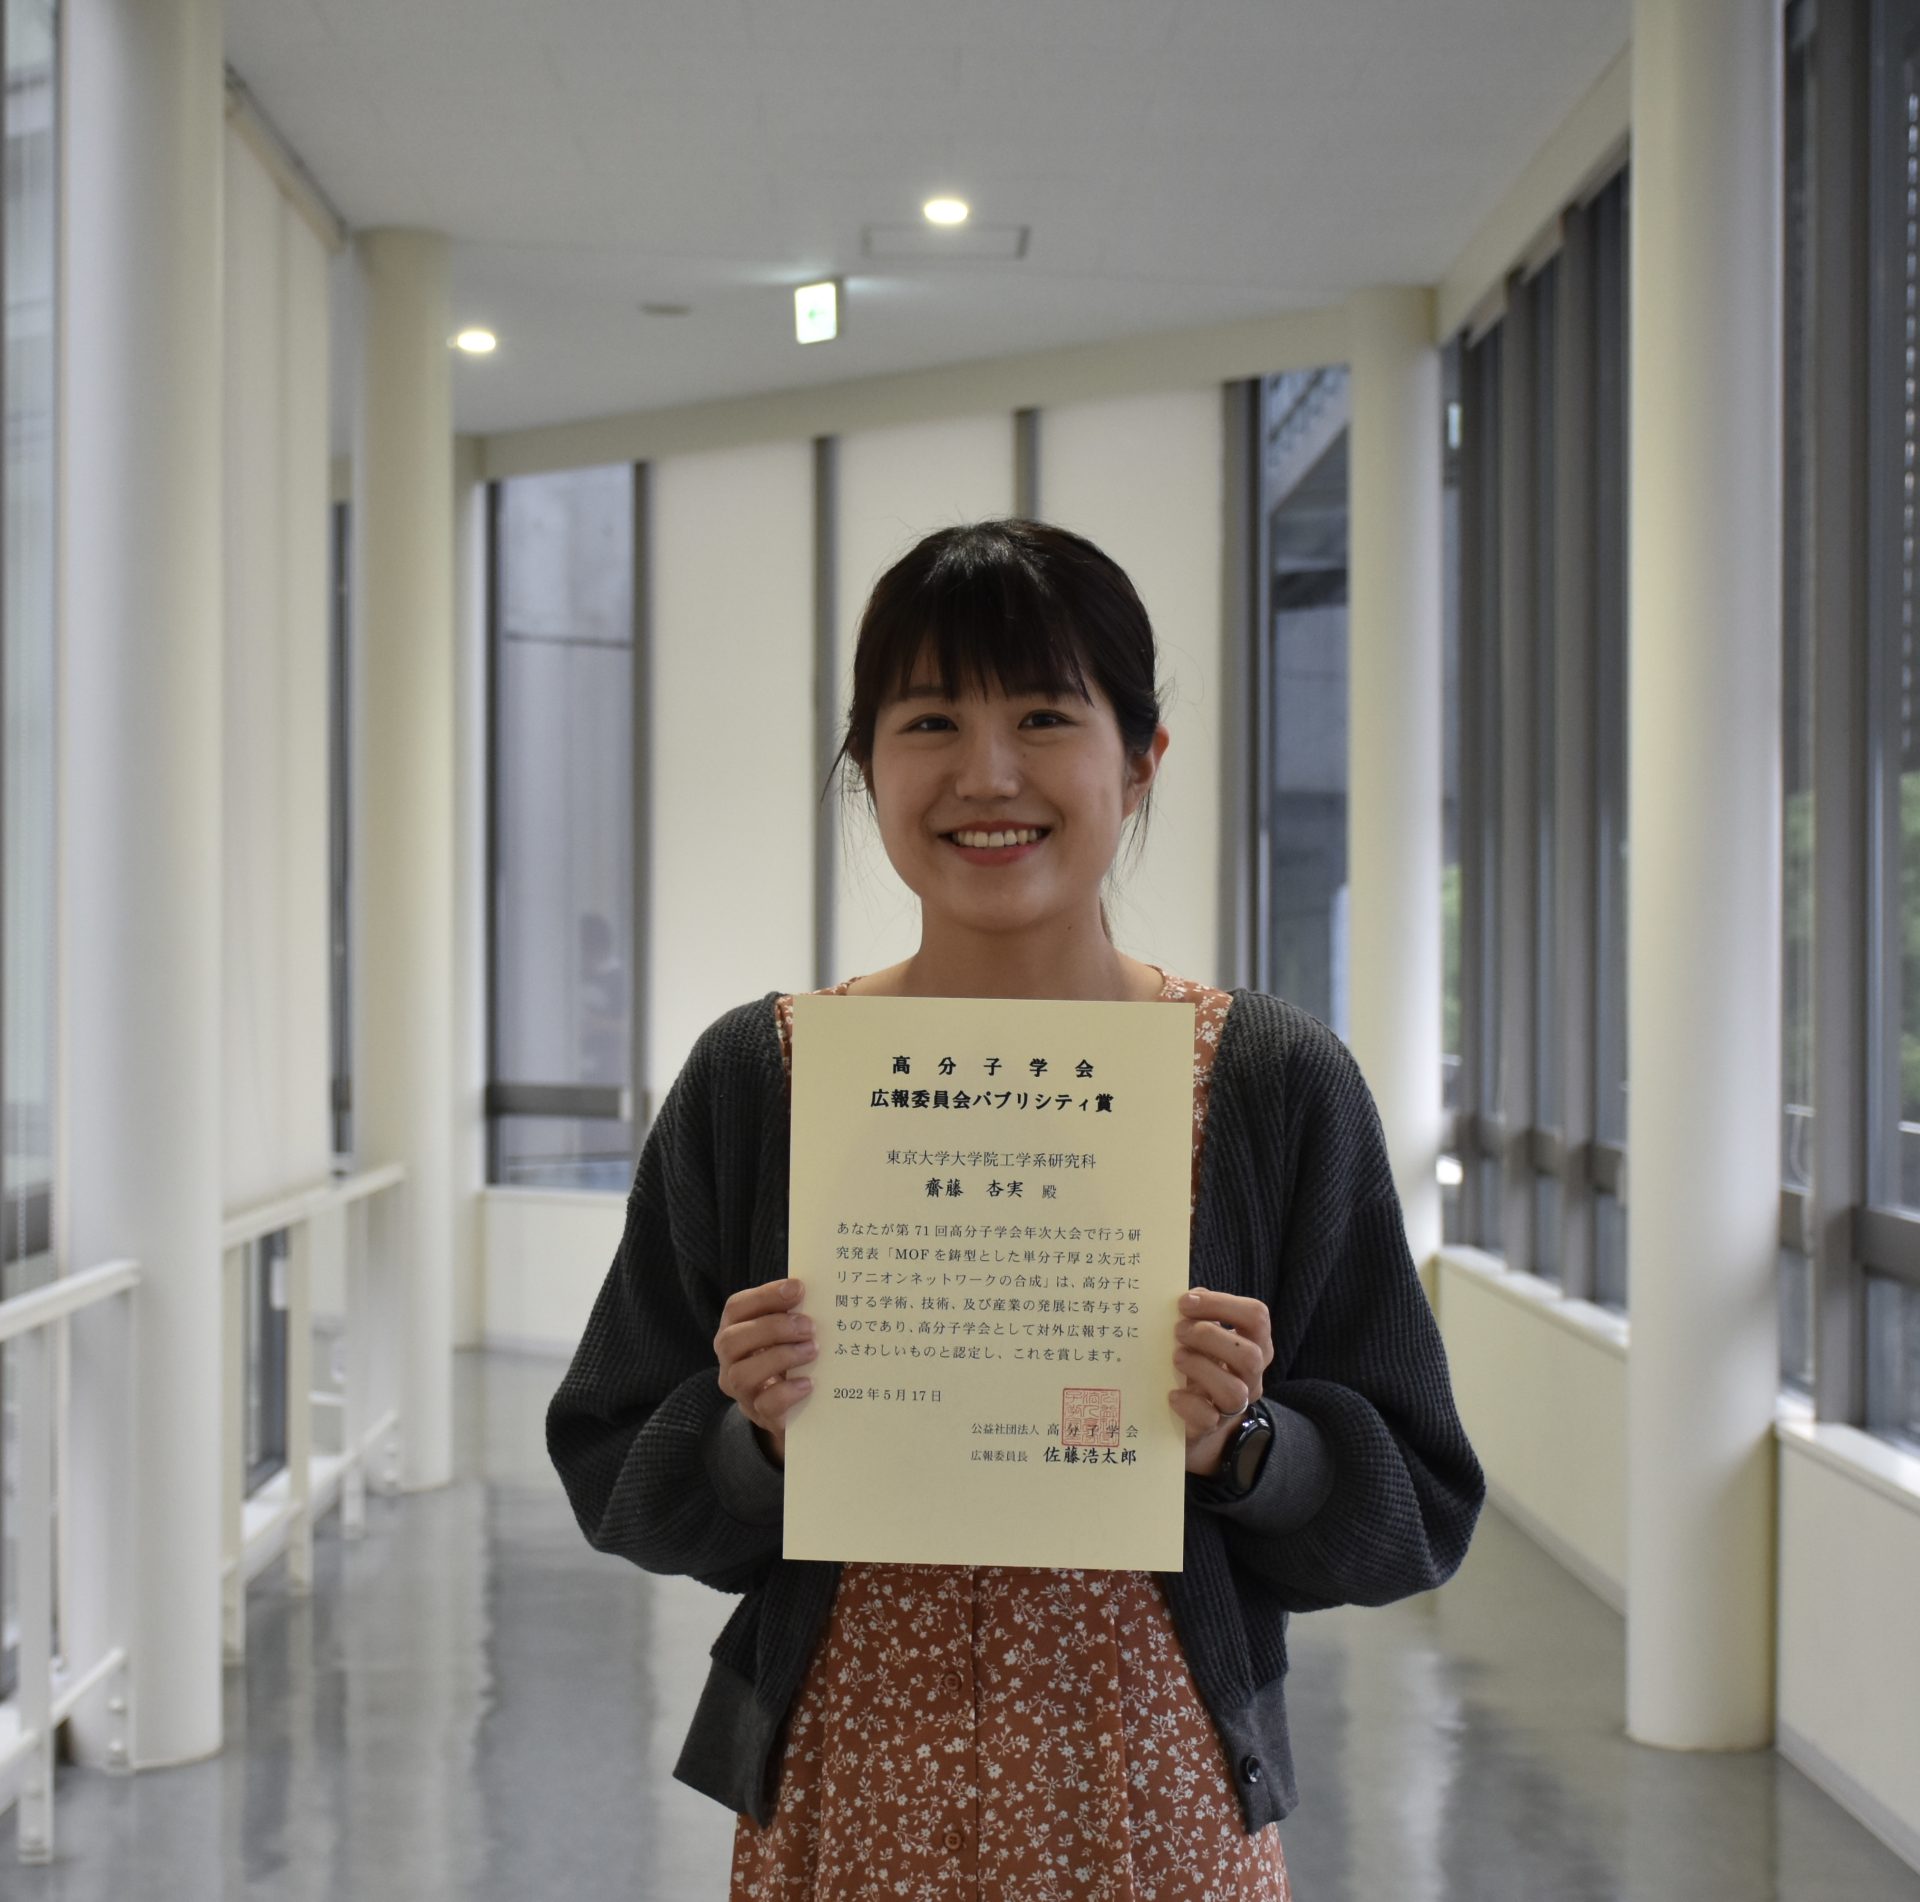 Ami Nishijima won the press award of 71st SPSJ conference